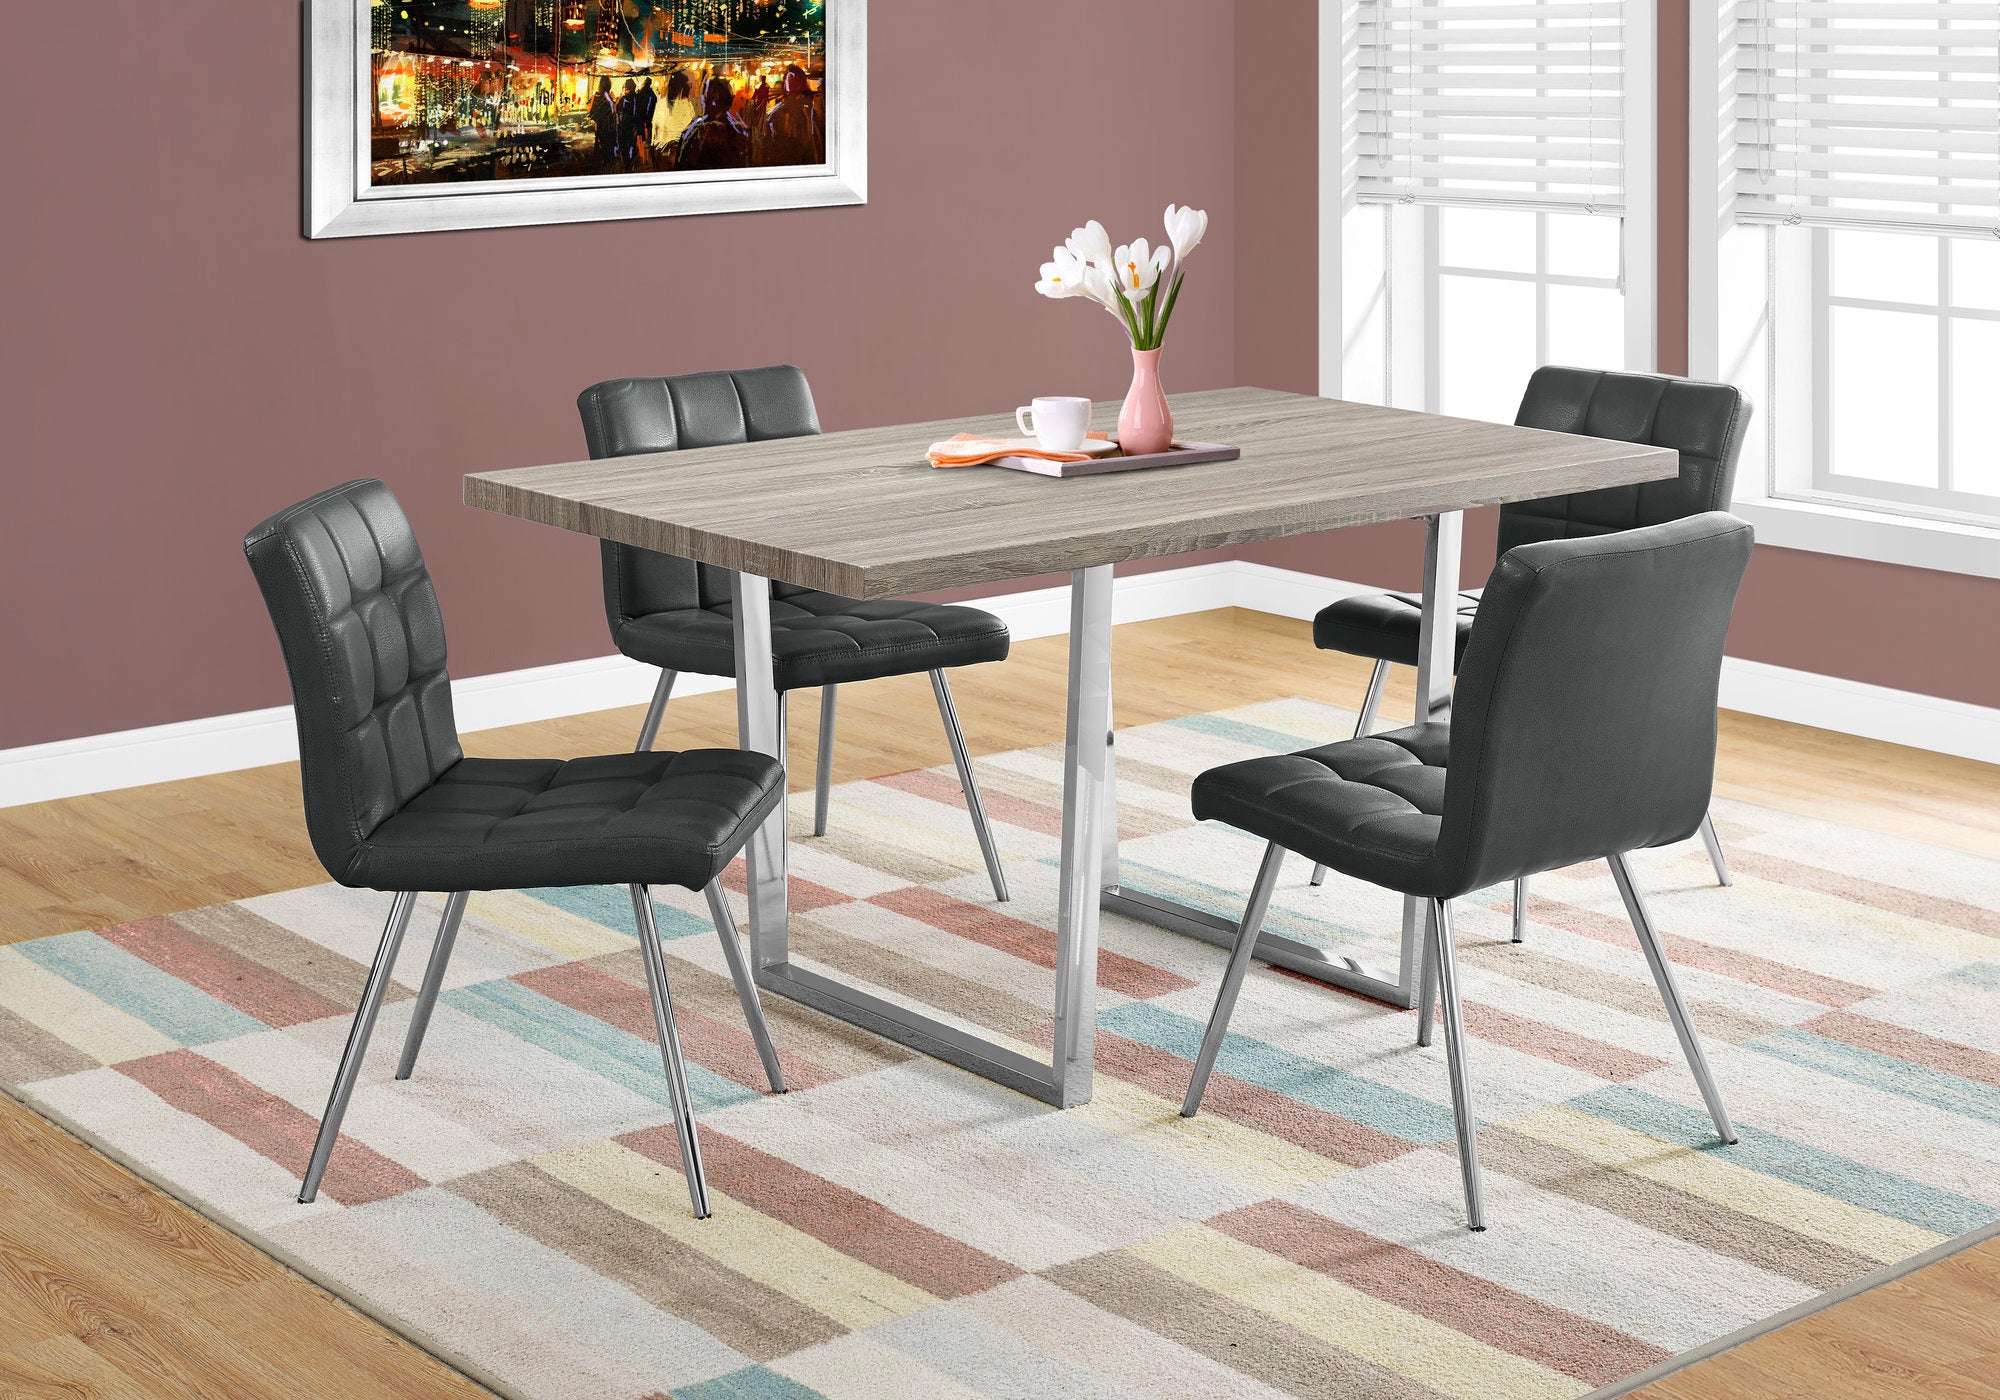 MN-611121    Dining Table, 60" Rectangular, Metal, Kitchen, Dining Room, Metal Legs, Laminate, Dark Taupe, Chrome, Contemporary, Modern